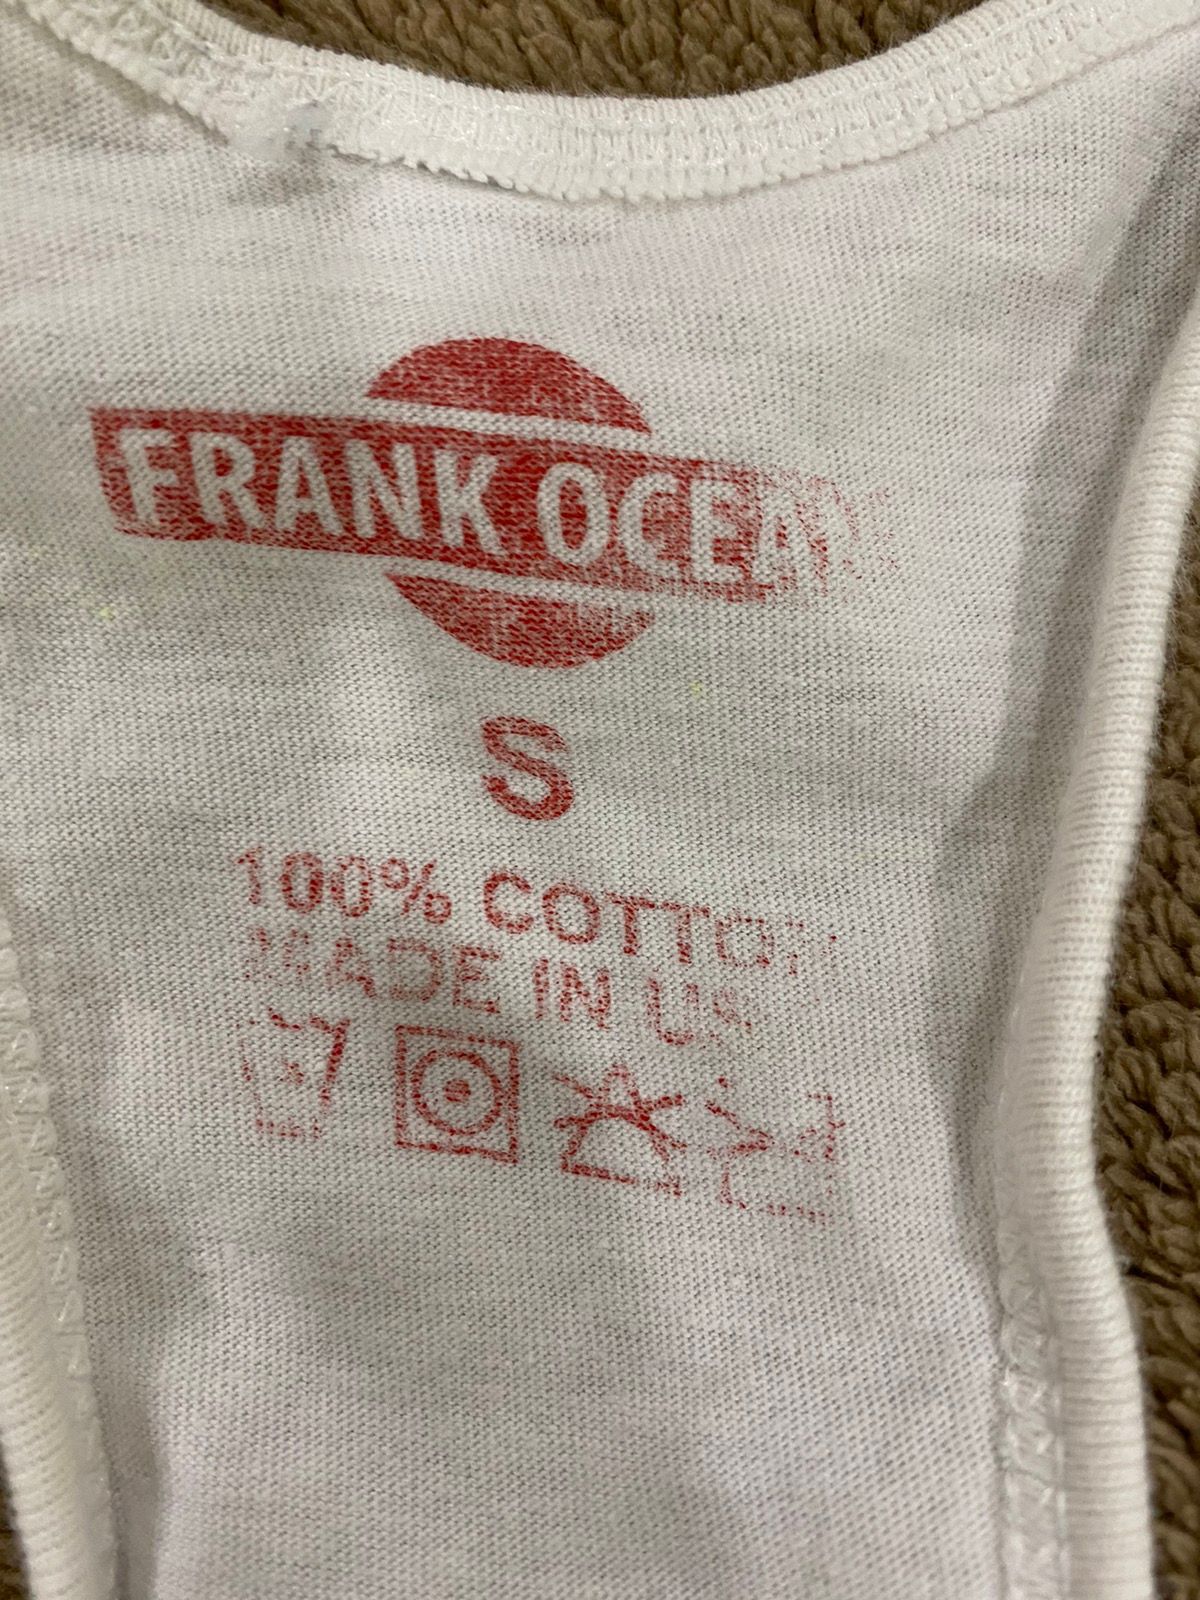 Frank Ocean Frank Ocean Channel Orange Nostalgia Ultra Tour shirt Size US S / EU 44-46 / 1 - 4 Preview